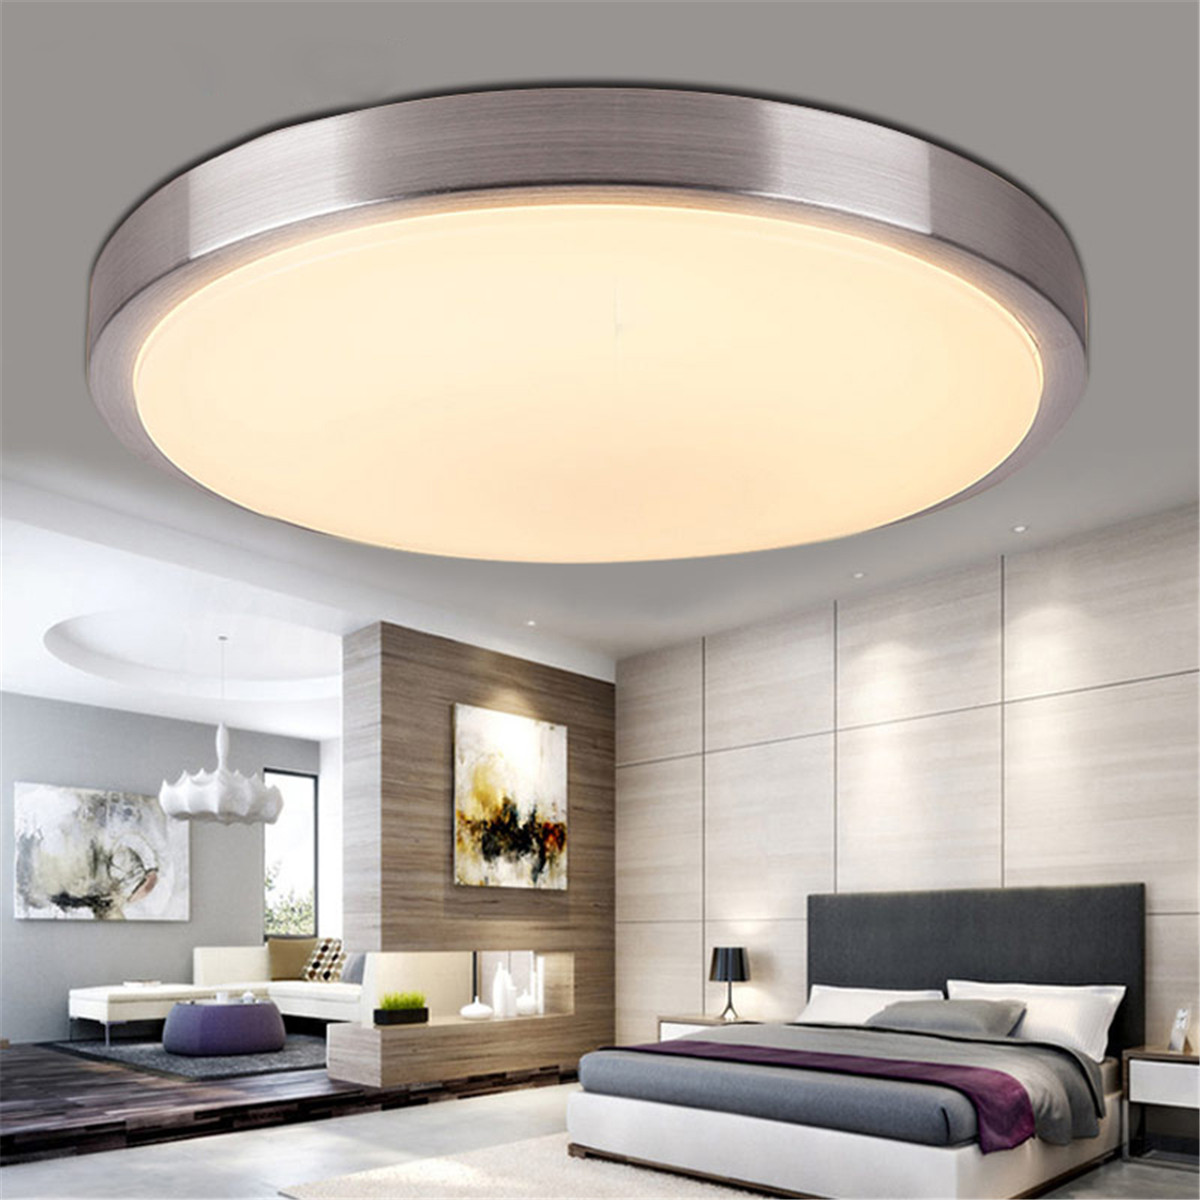 Living Room Ceiling Light Fixtures
 5 15 36w Modern LED Round Ceiling Light Bedroom Living